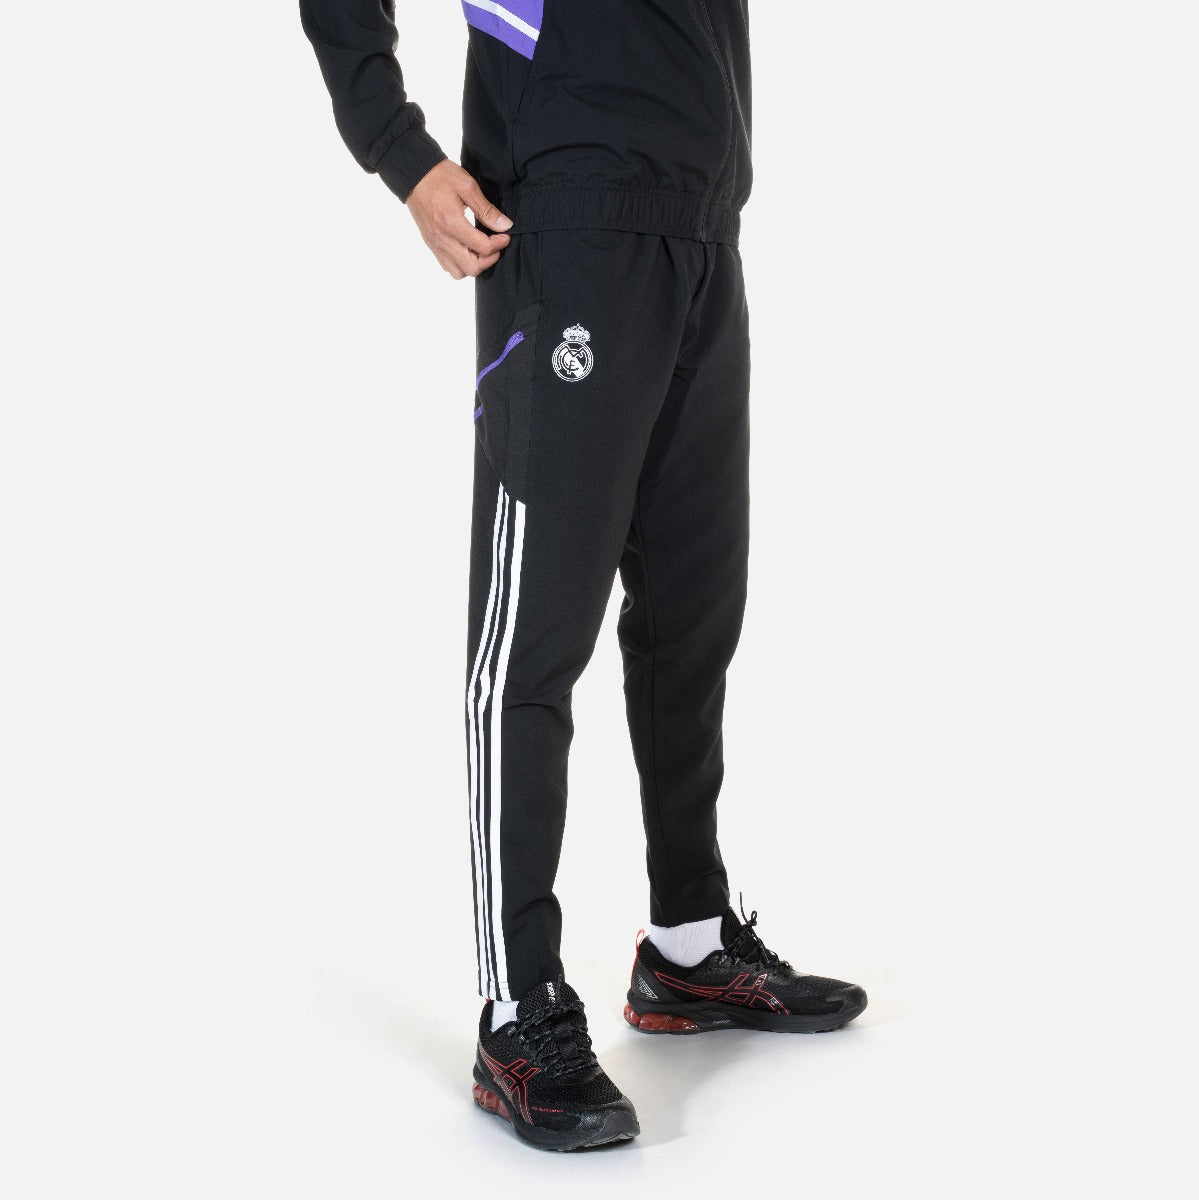 Real Madrid Condivo Track Pants 2022/2023 - Black/White/Purple